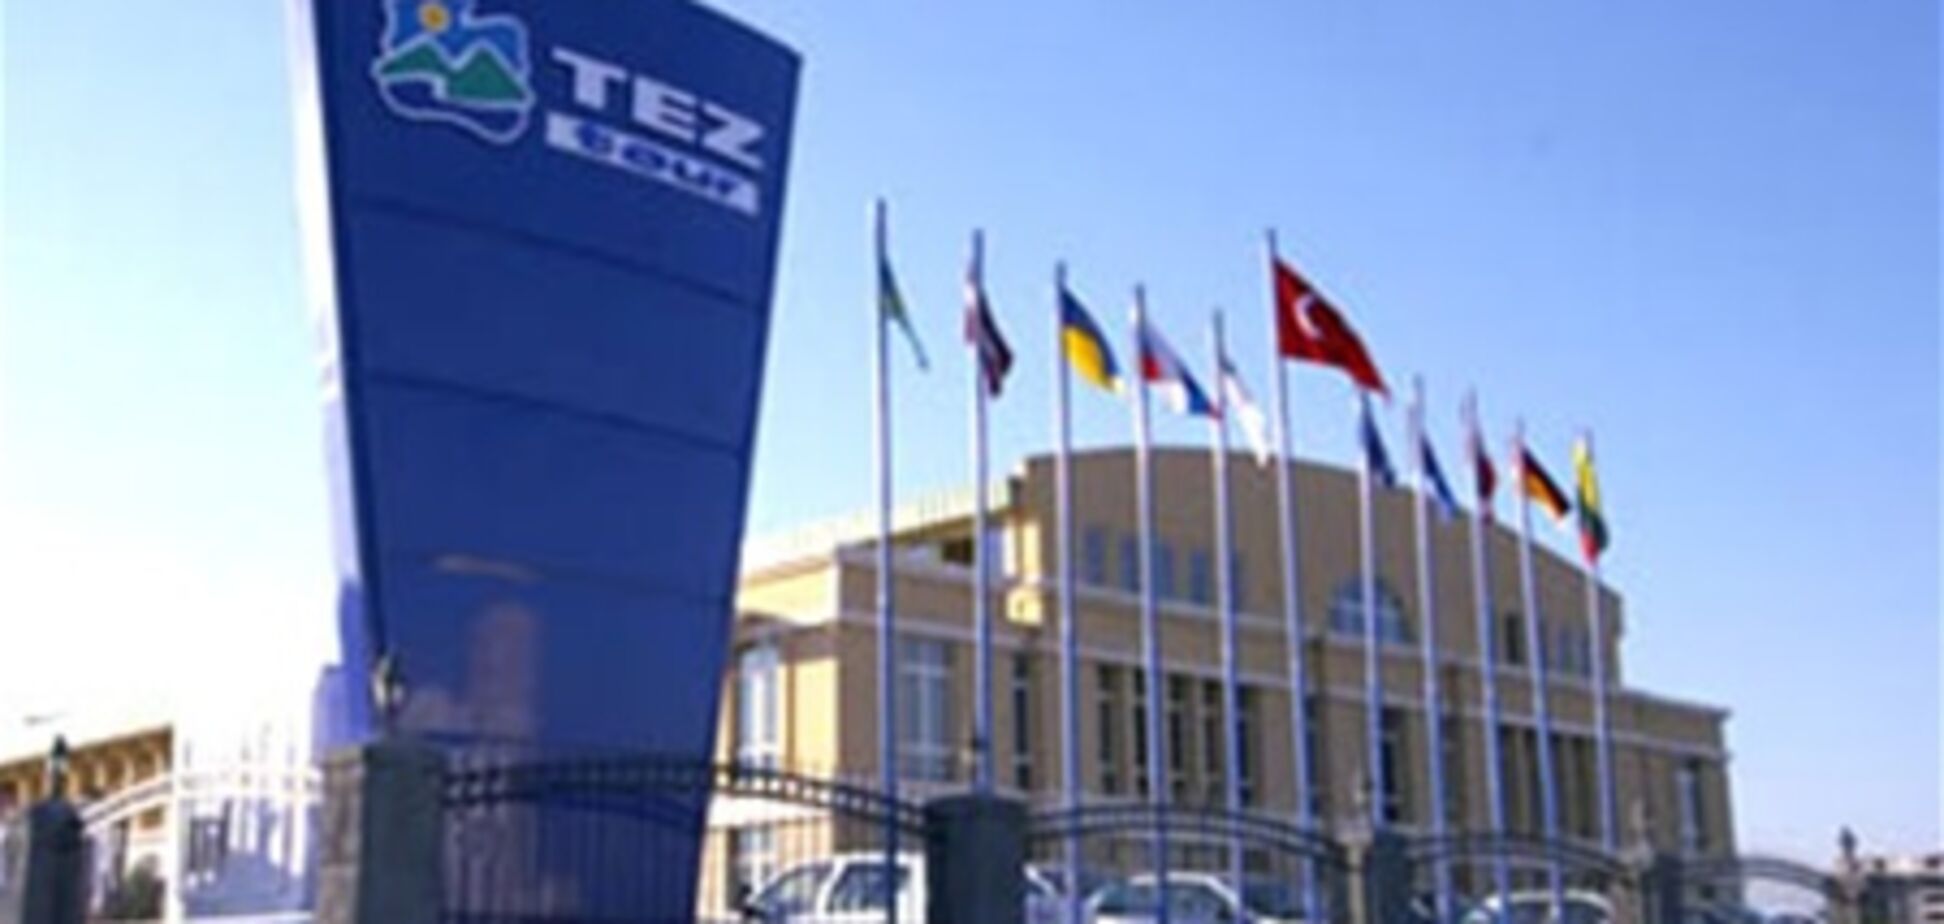 Tez Tour возьмет кредит на 150 млн долларов на строительство гостиниц